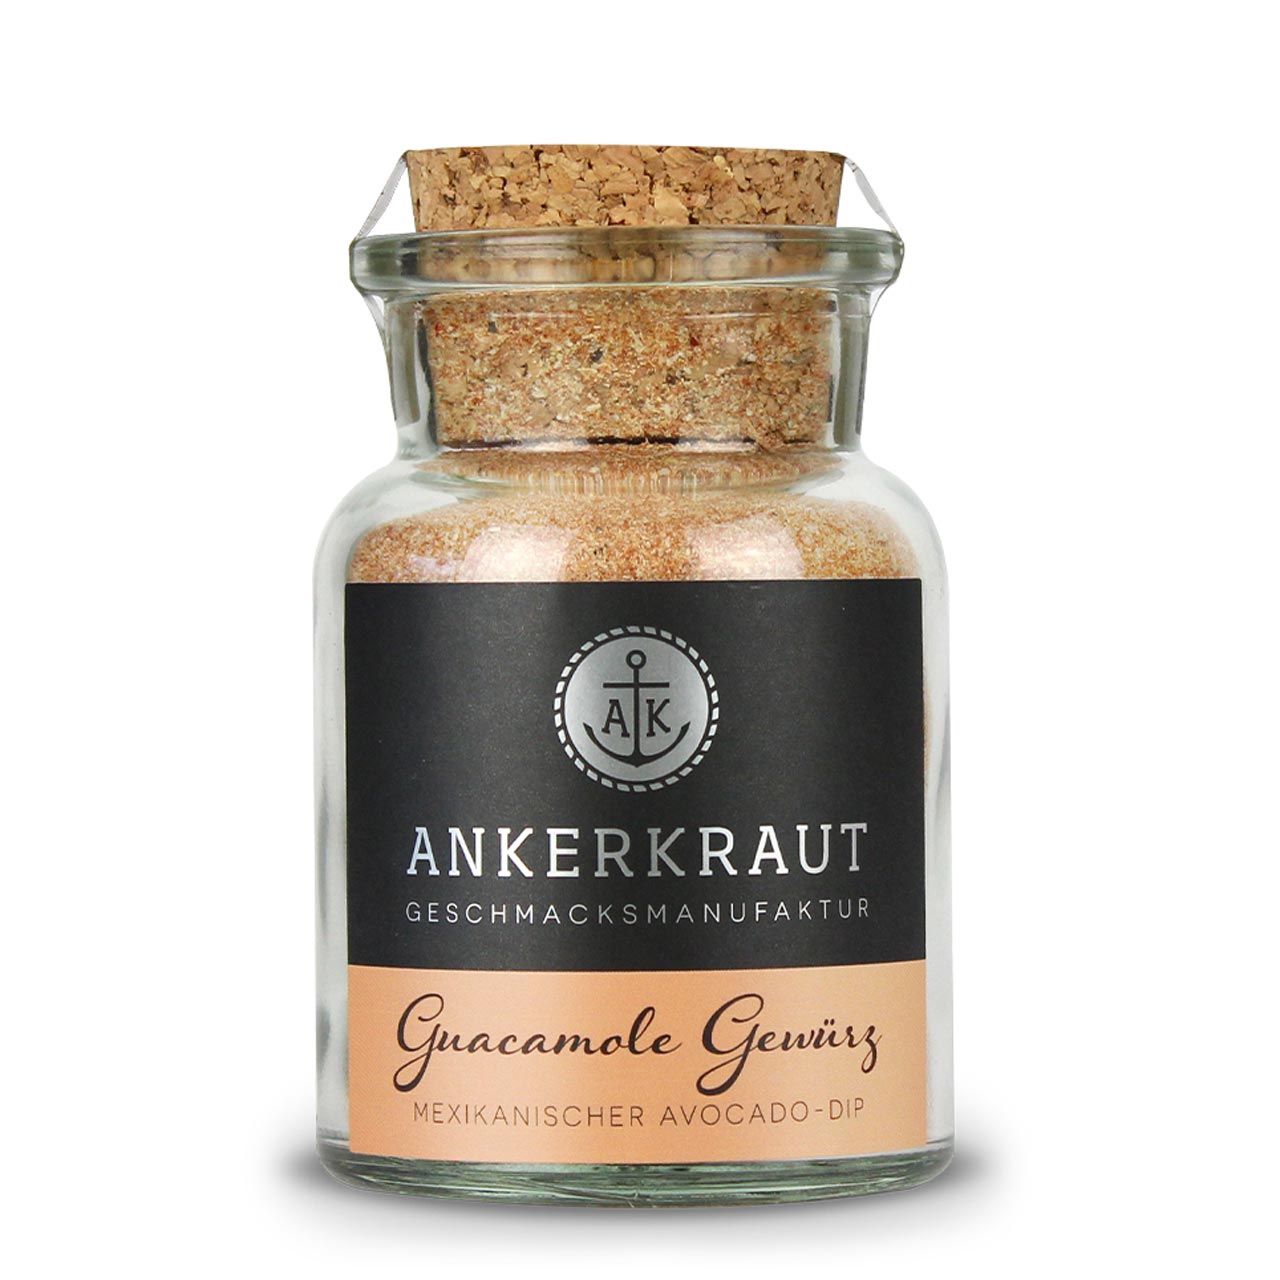 Ankerkraut Guacamole Gewürz, 110g Korkenglas